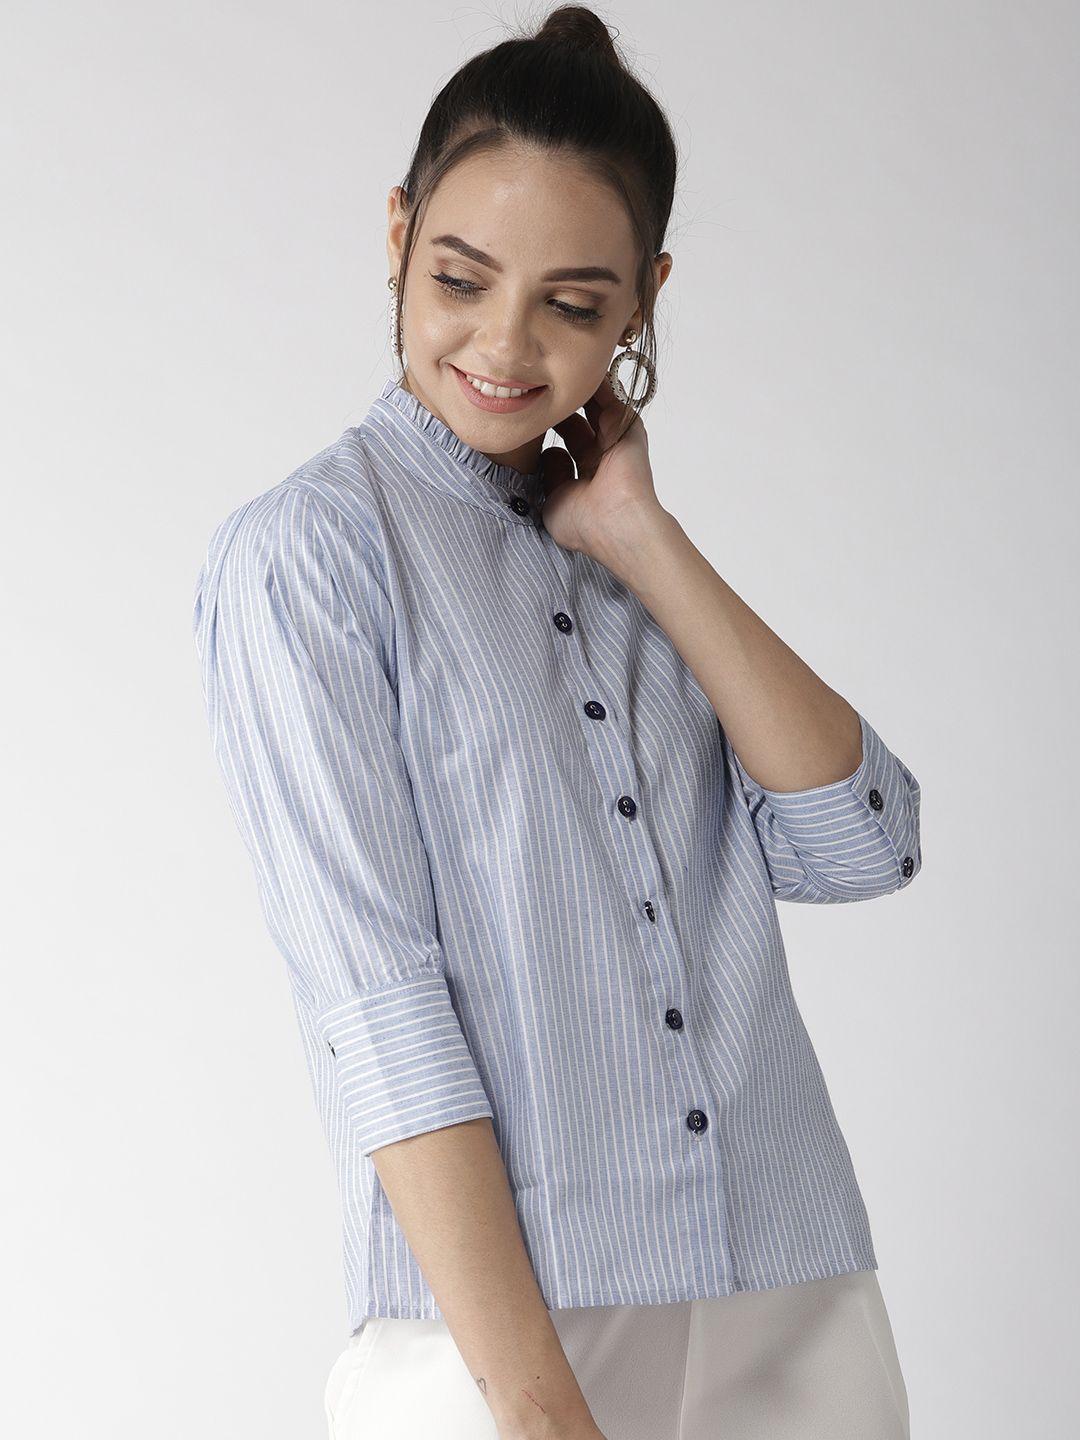 style quotient women blue & white striped shirt style pure cotton top